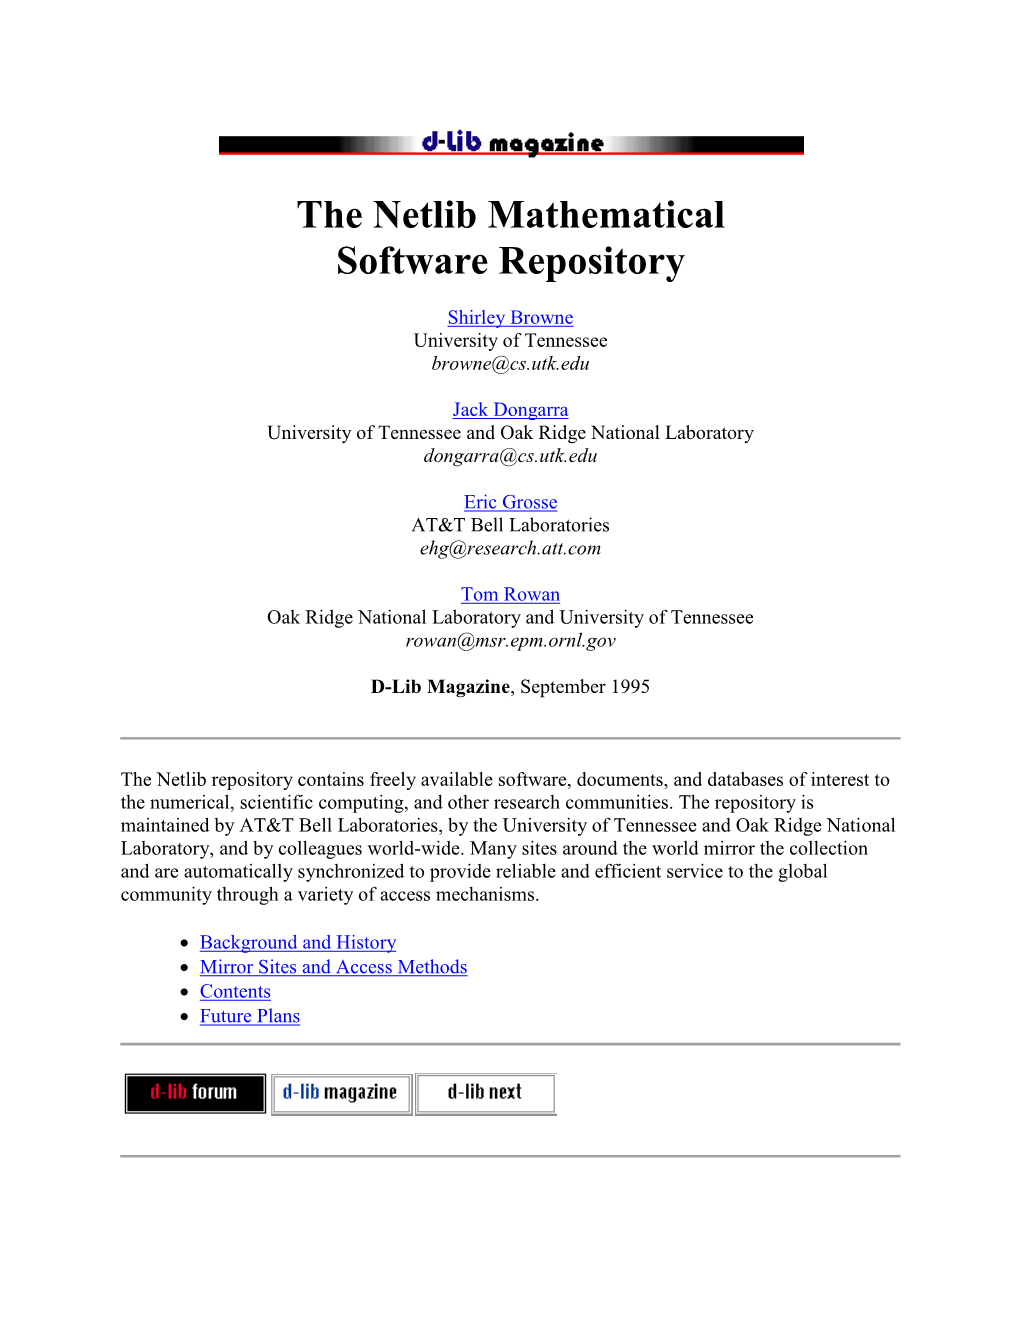 The Netlib Mathematical Software Repository